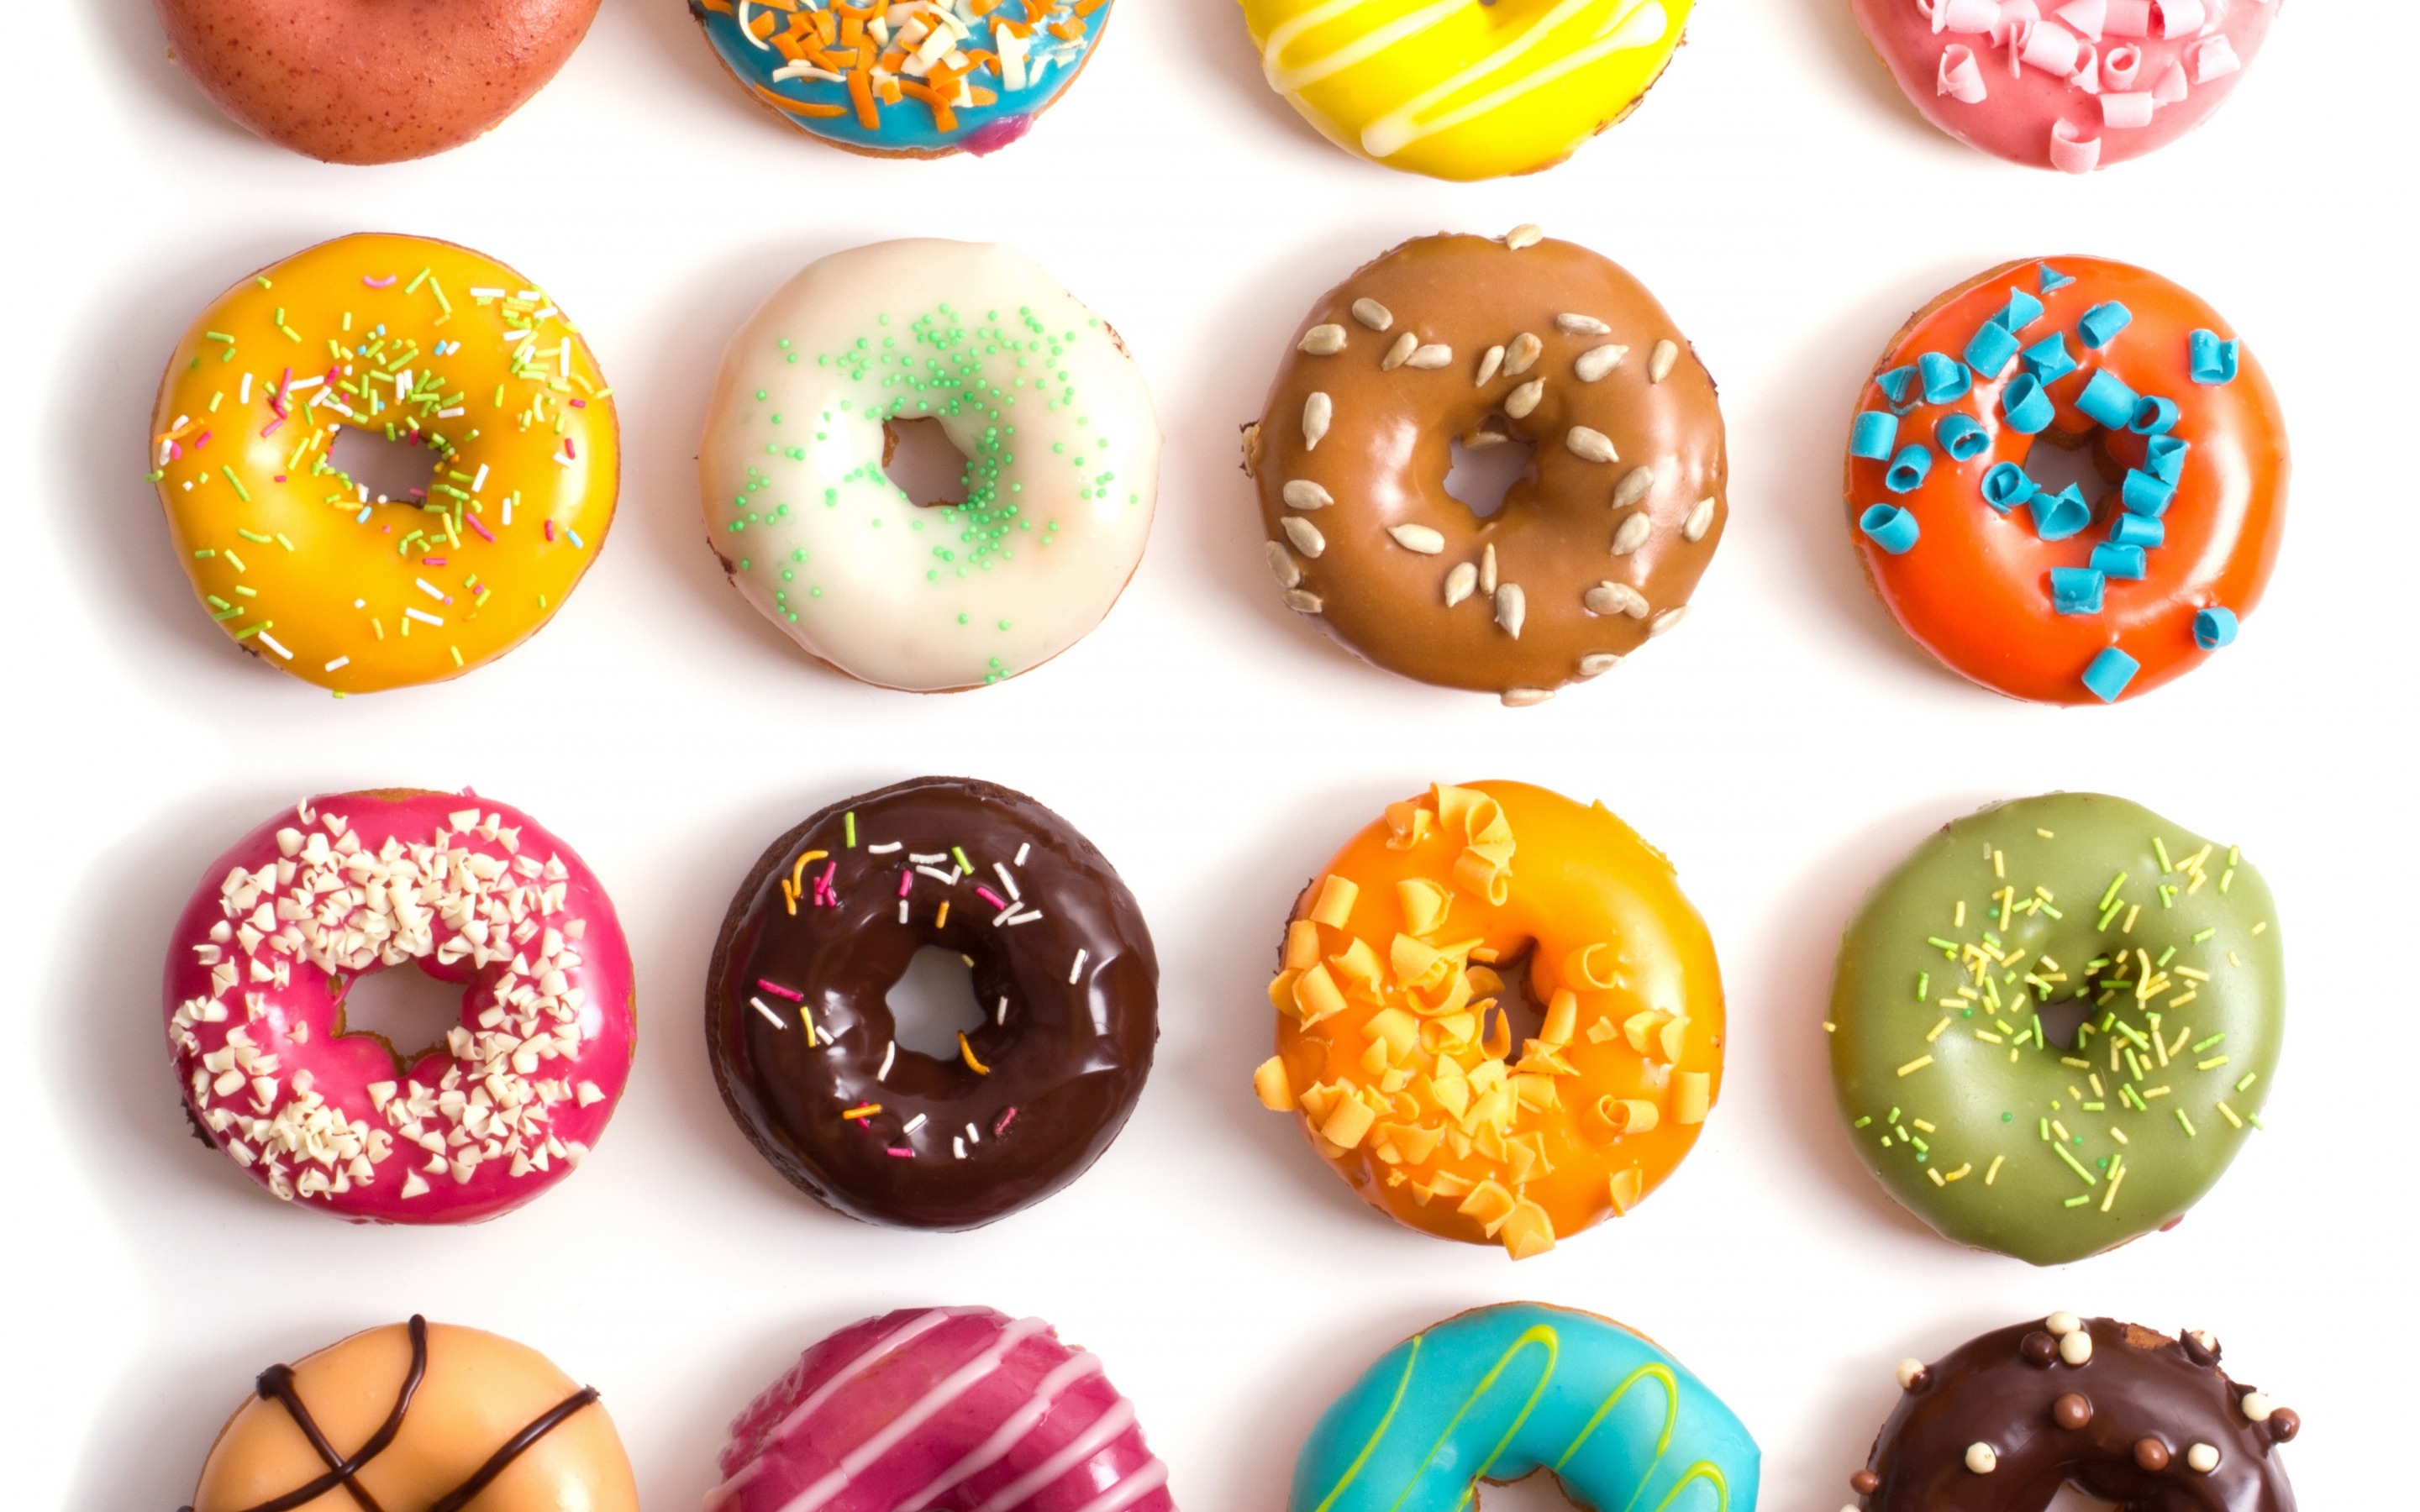 dunkin donuts wallpaper,krapfen,essen,ciambella,backwaren,lebensmittelfarbe